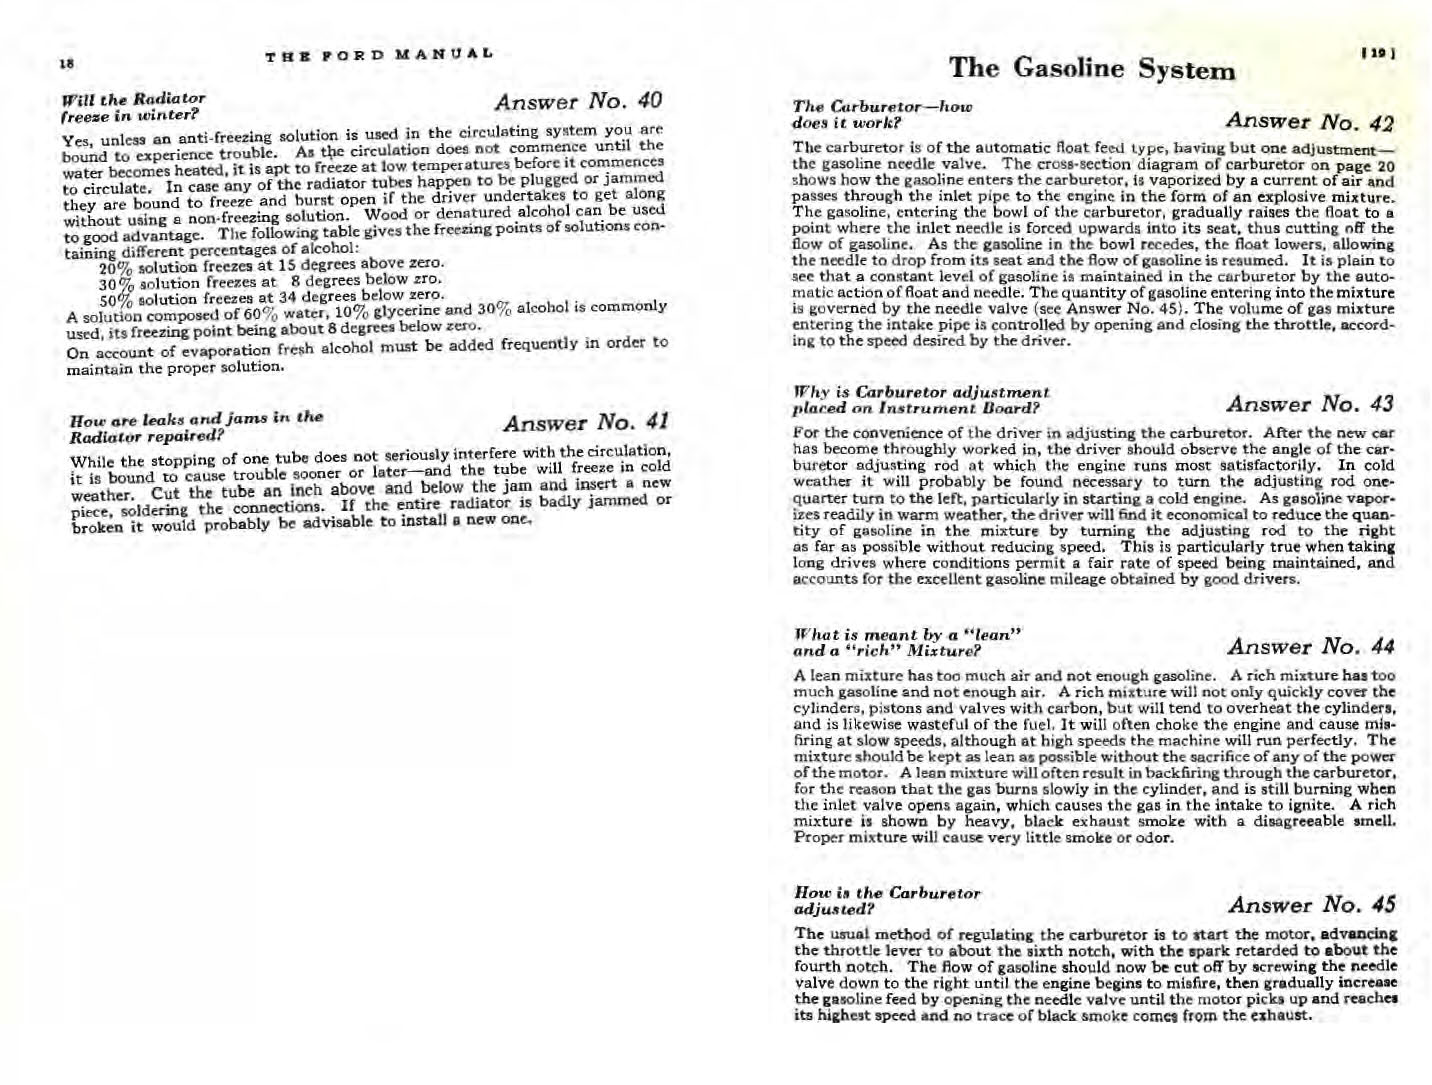 n_1926 Ford Owners Manual-18-19.jpg